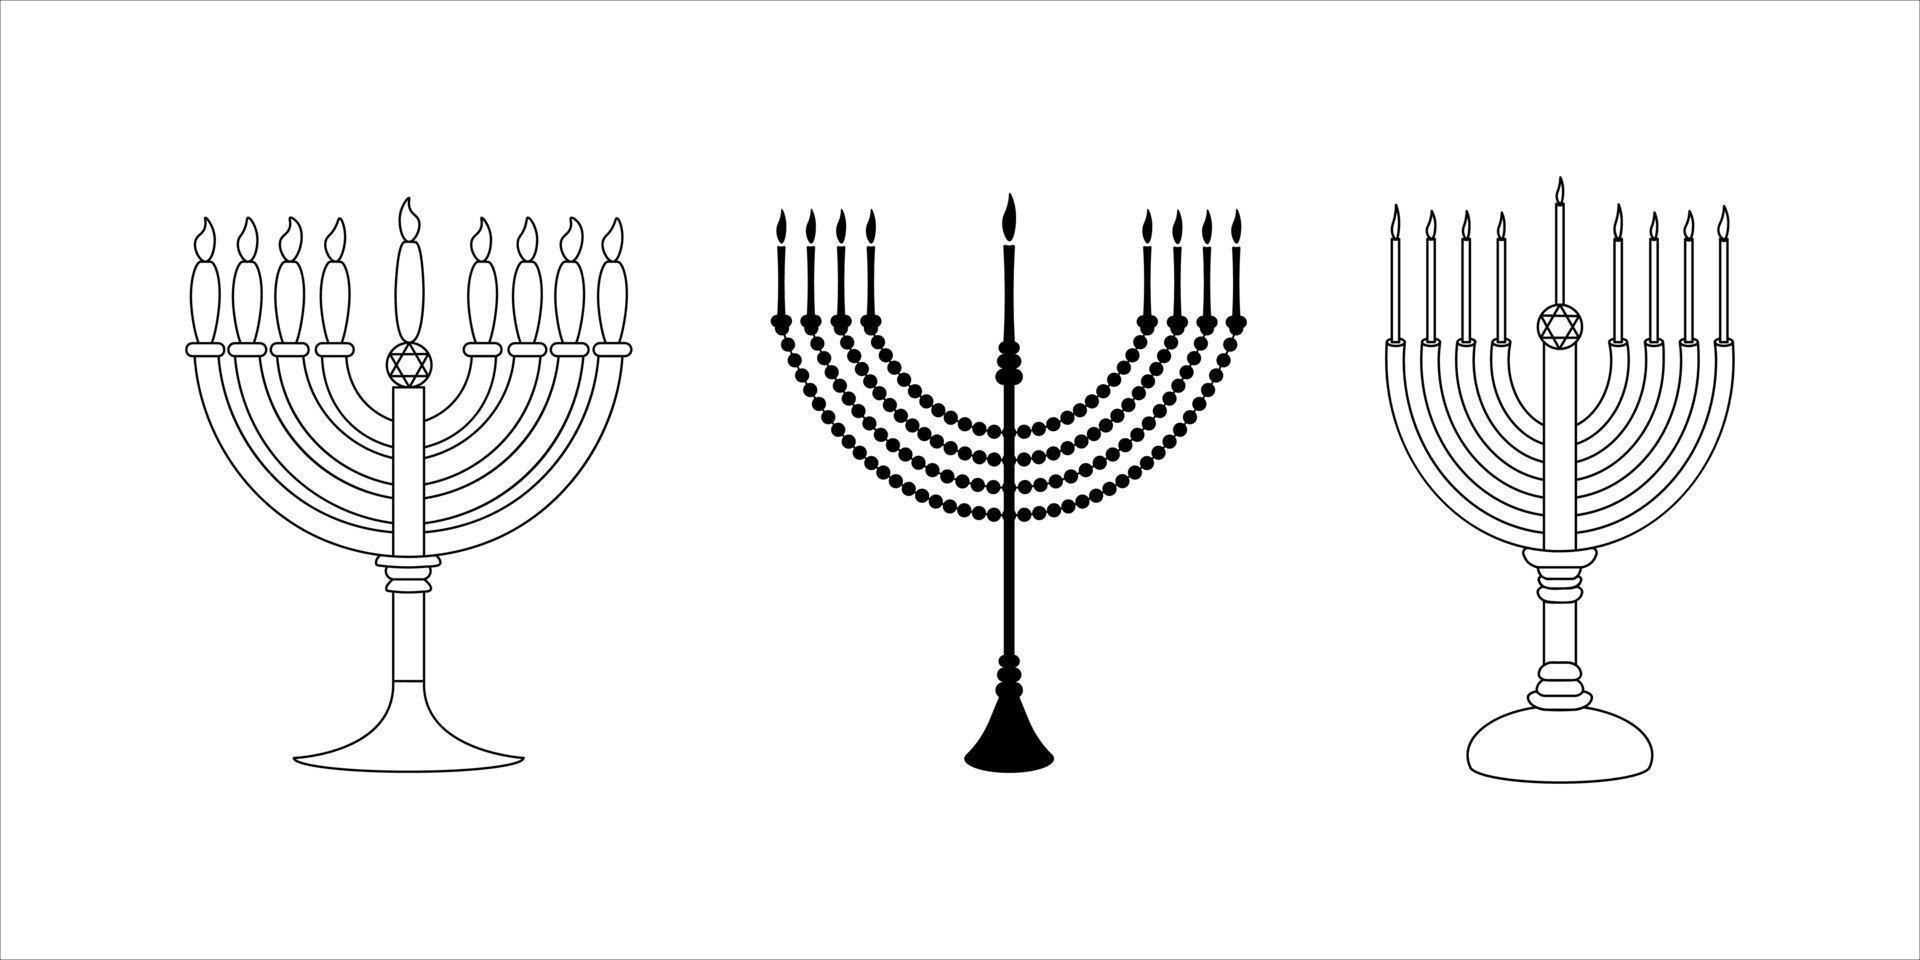 menorá de vela desenhada de mão para clipart de hanukkah. isolado no fundo branco. vetor